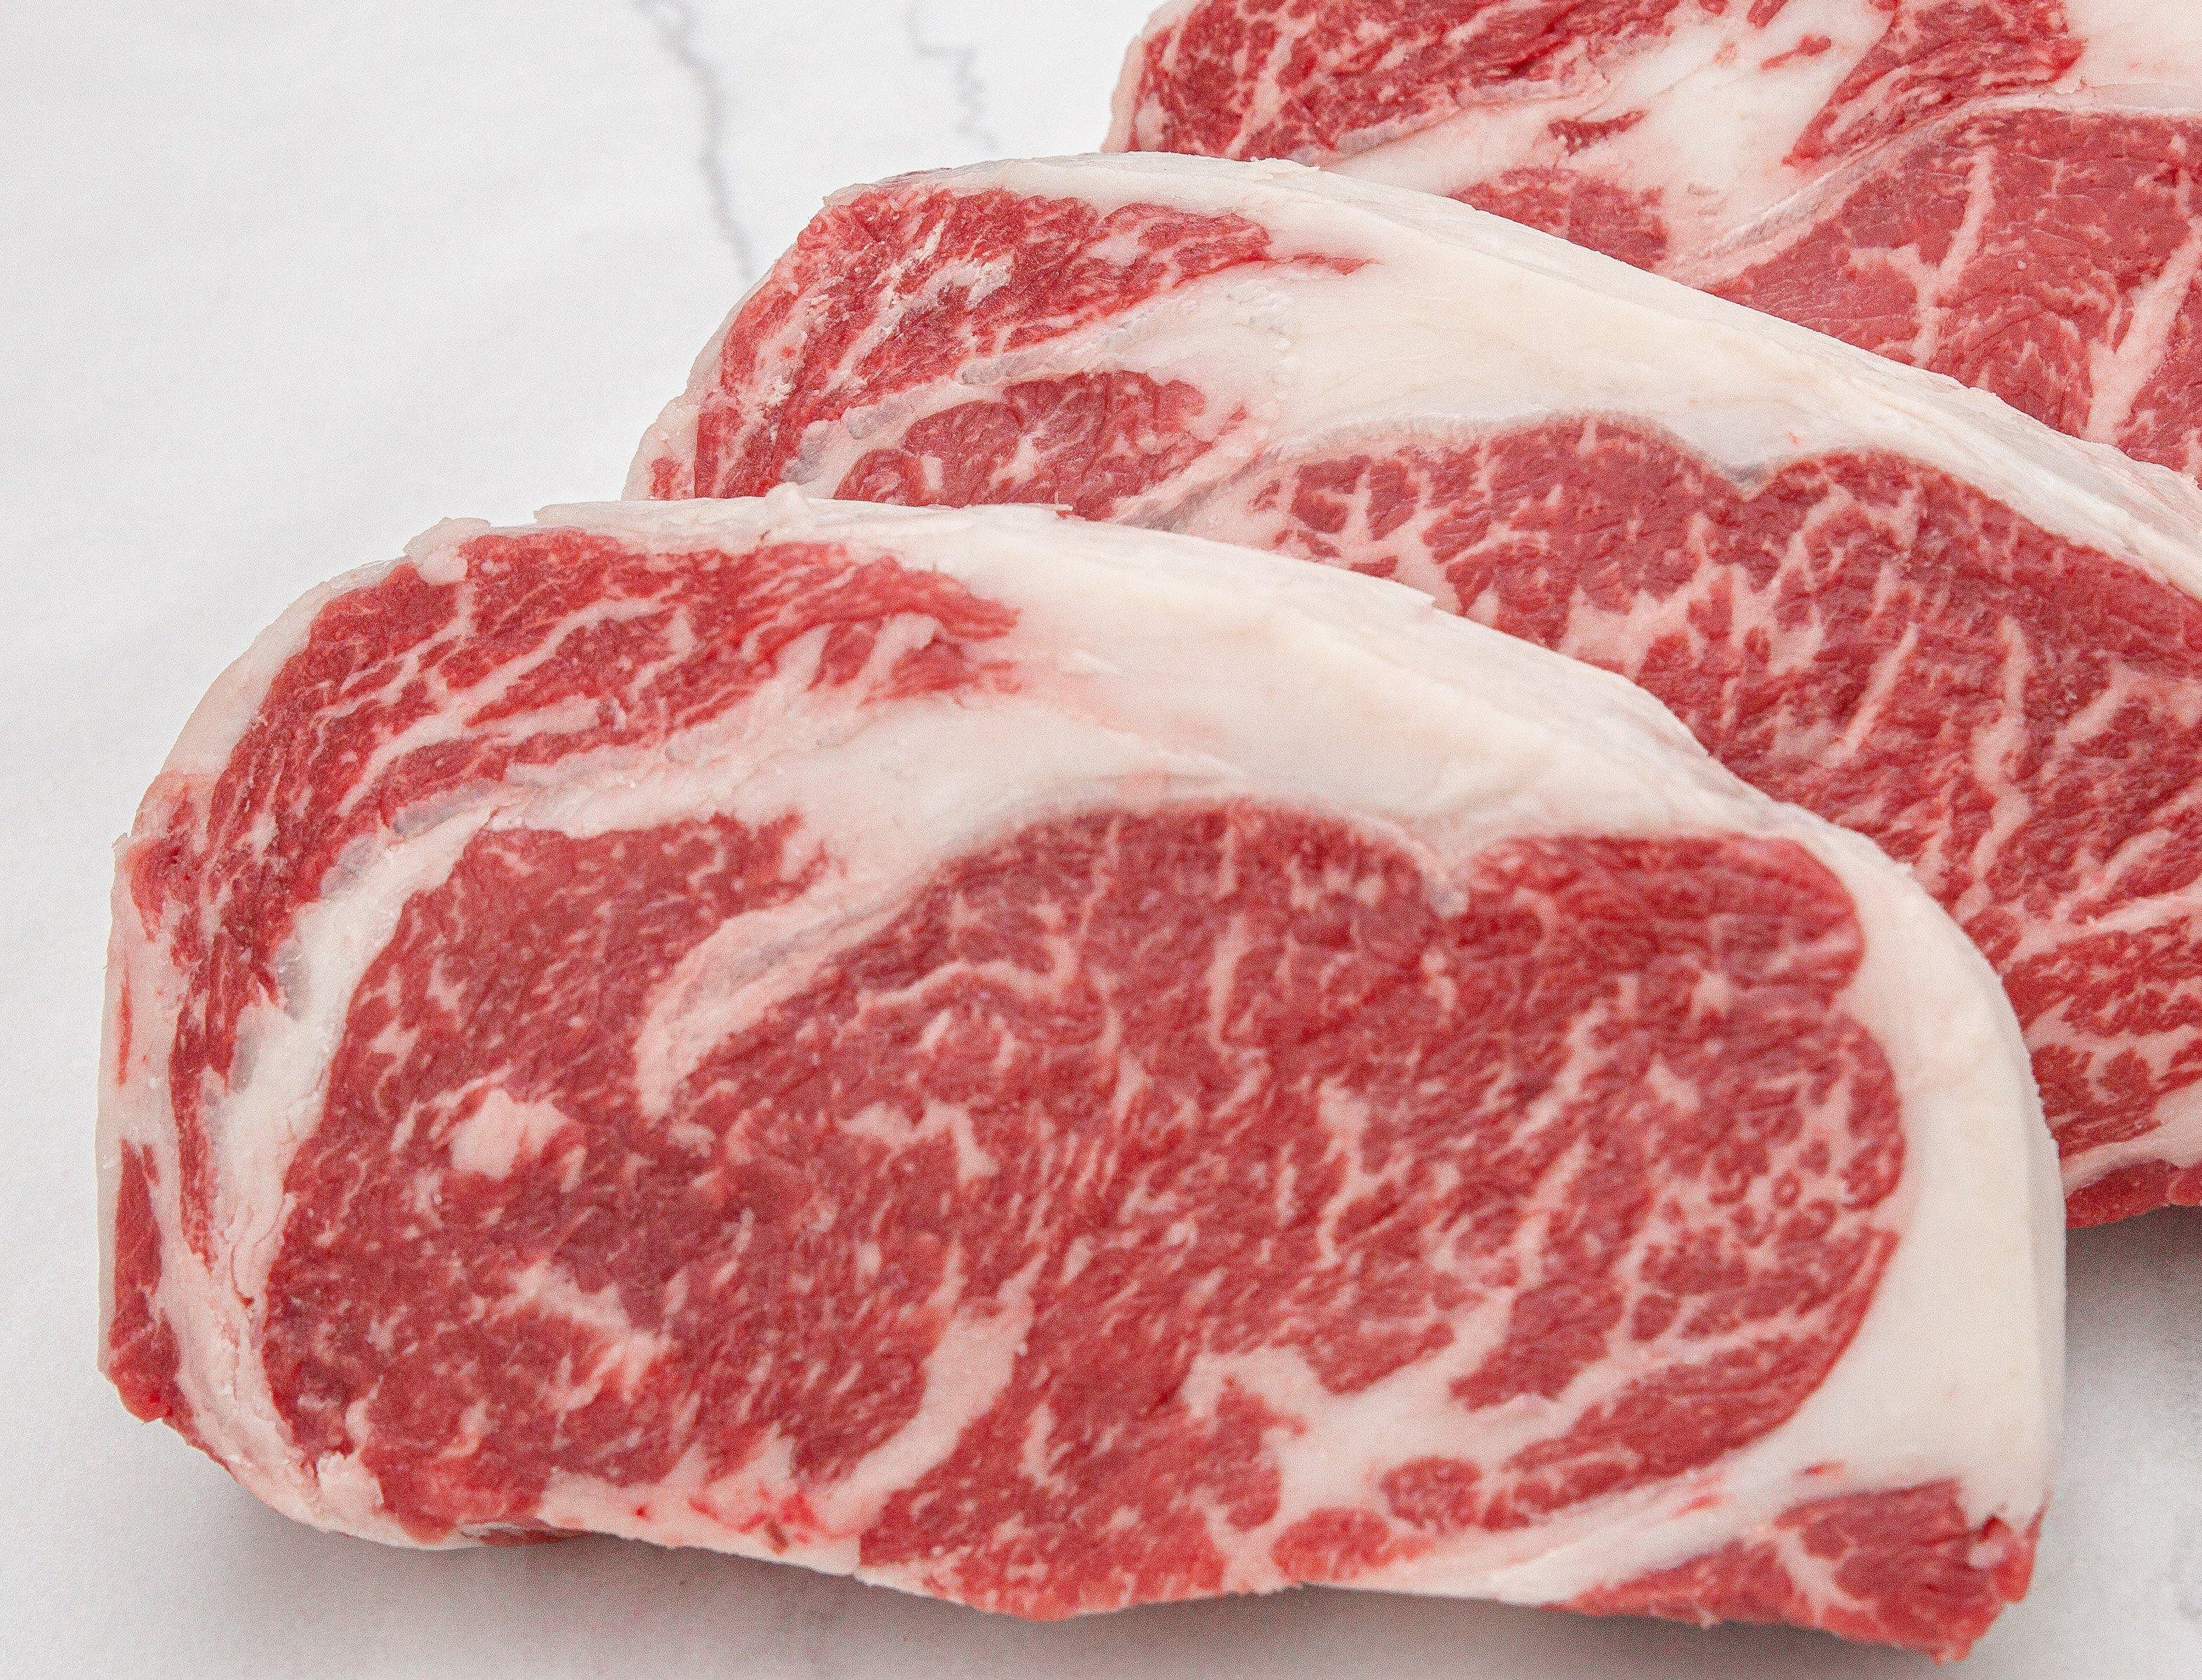 Prime Boneless Ribeye Steak